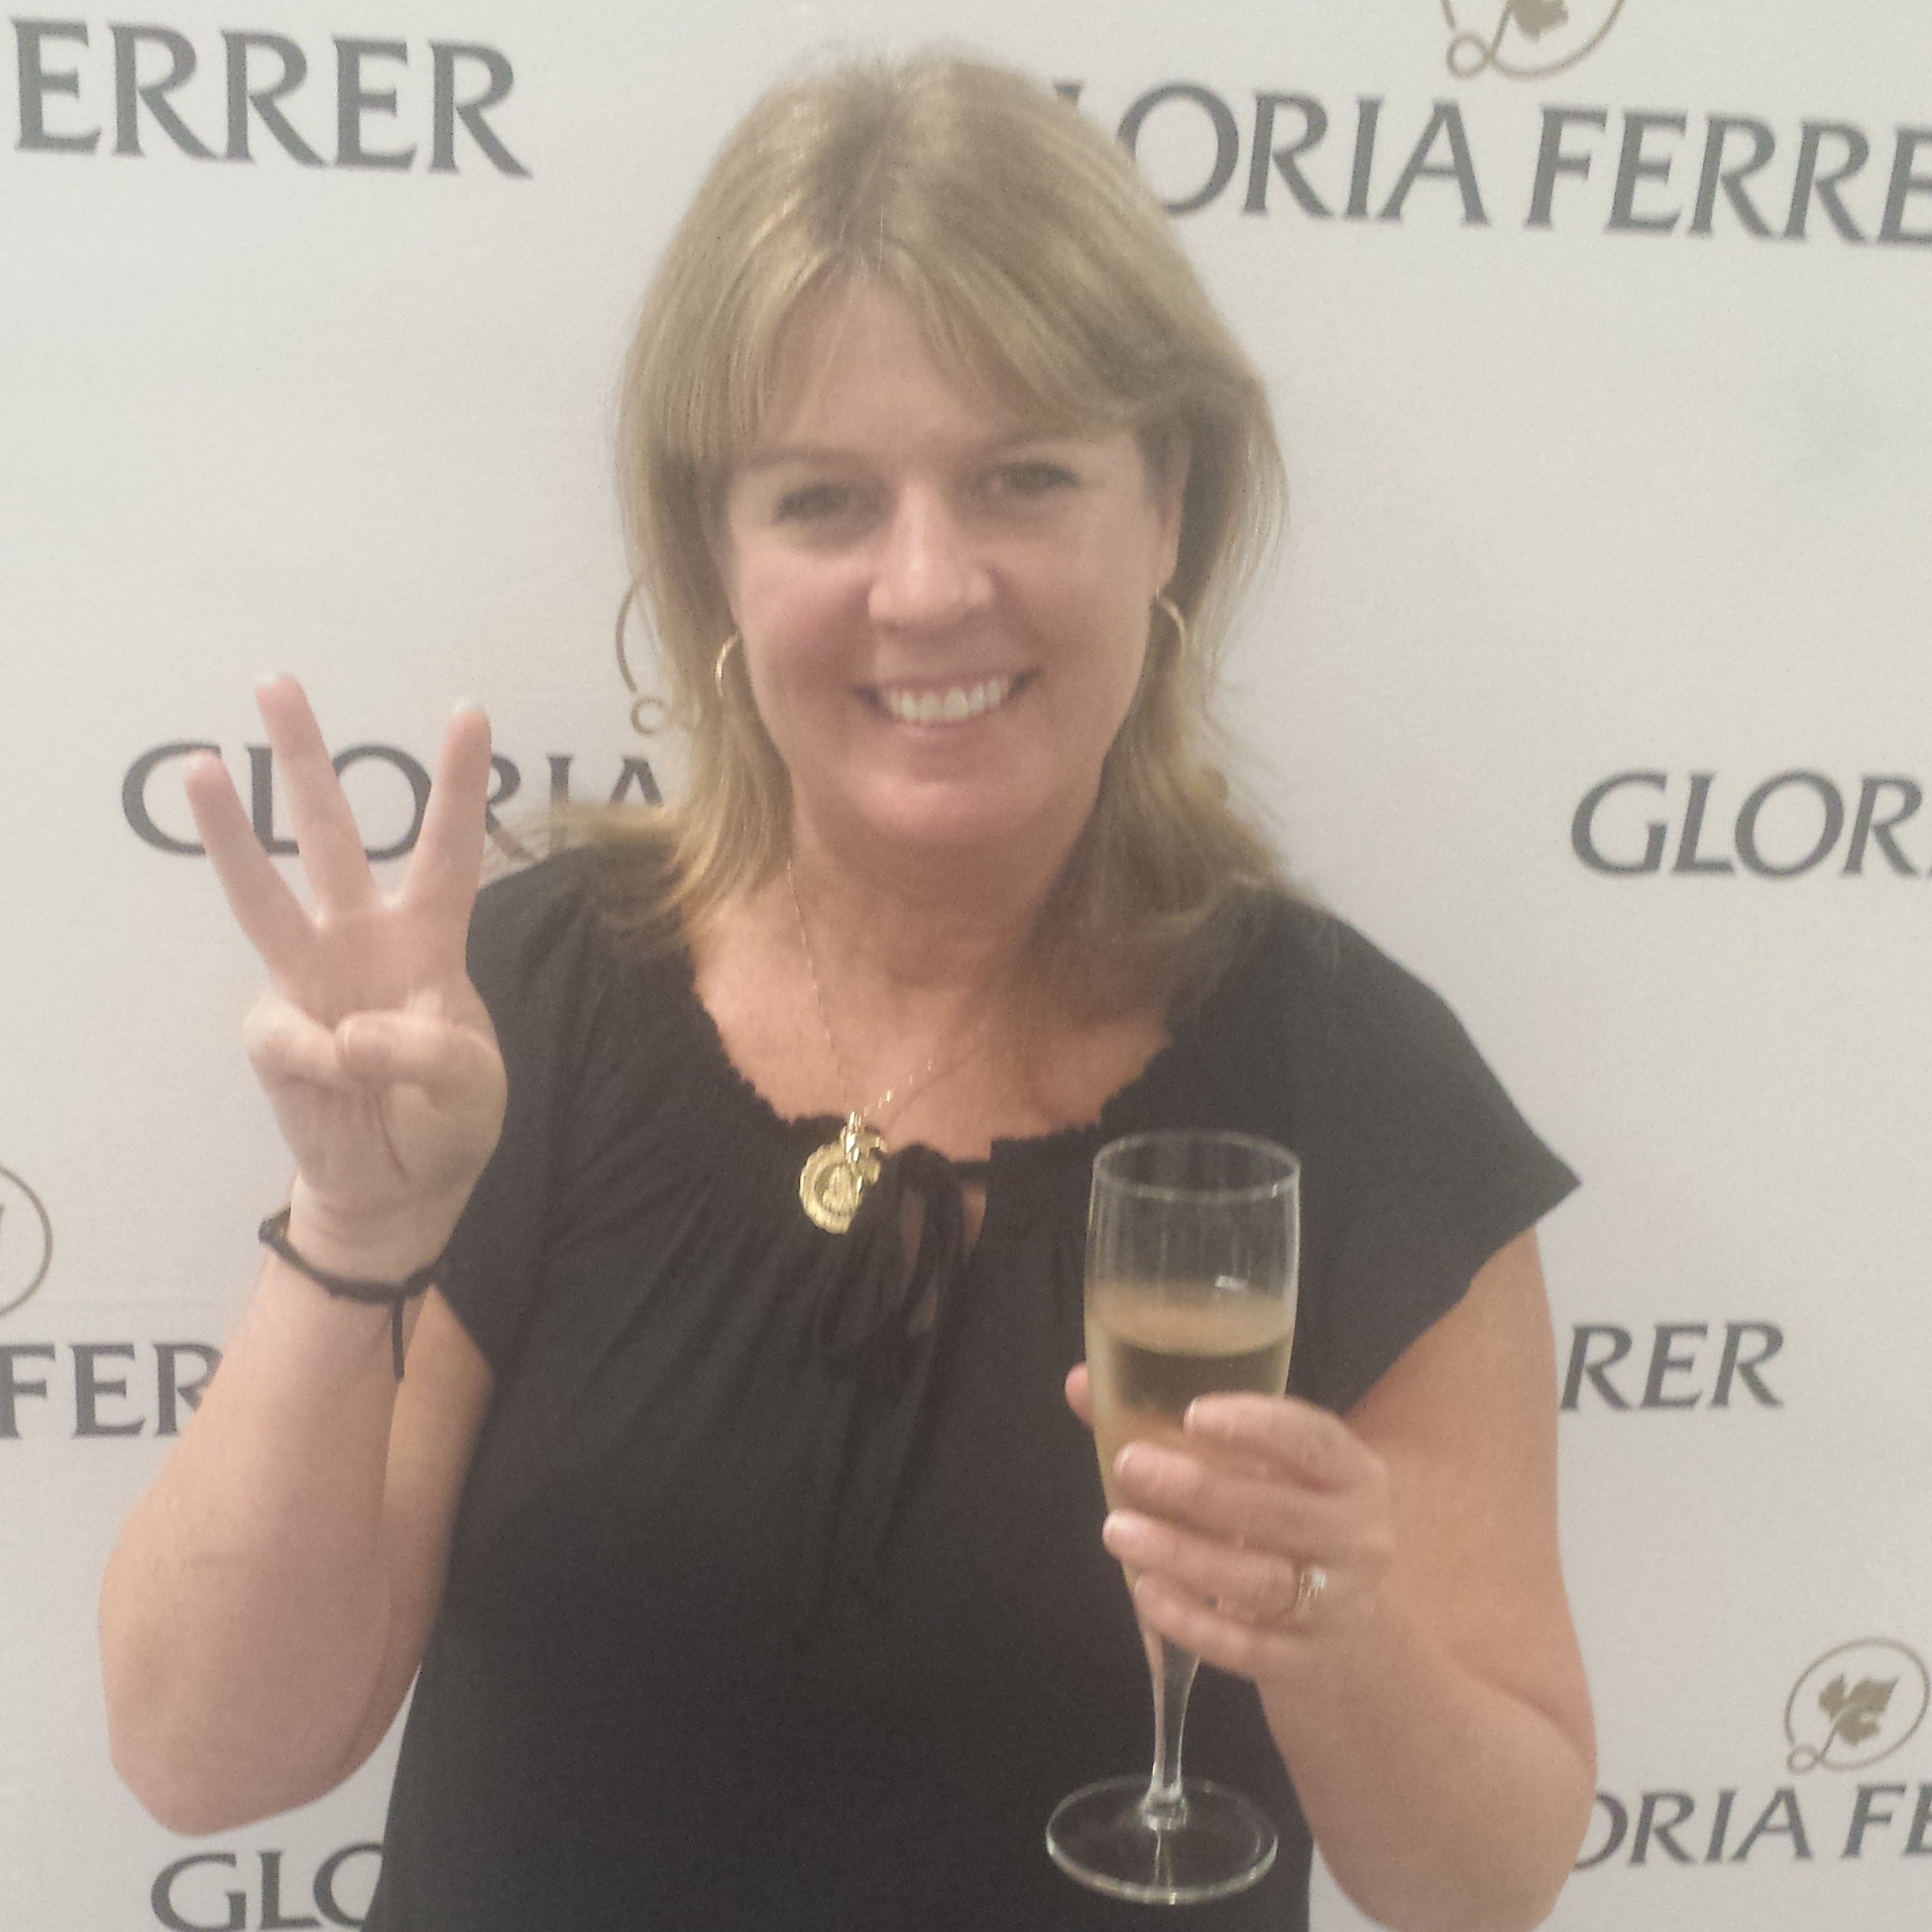 gloria-ferrer-3rd-place